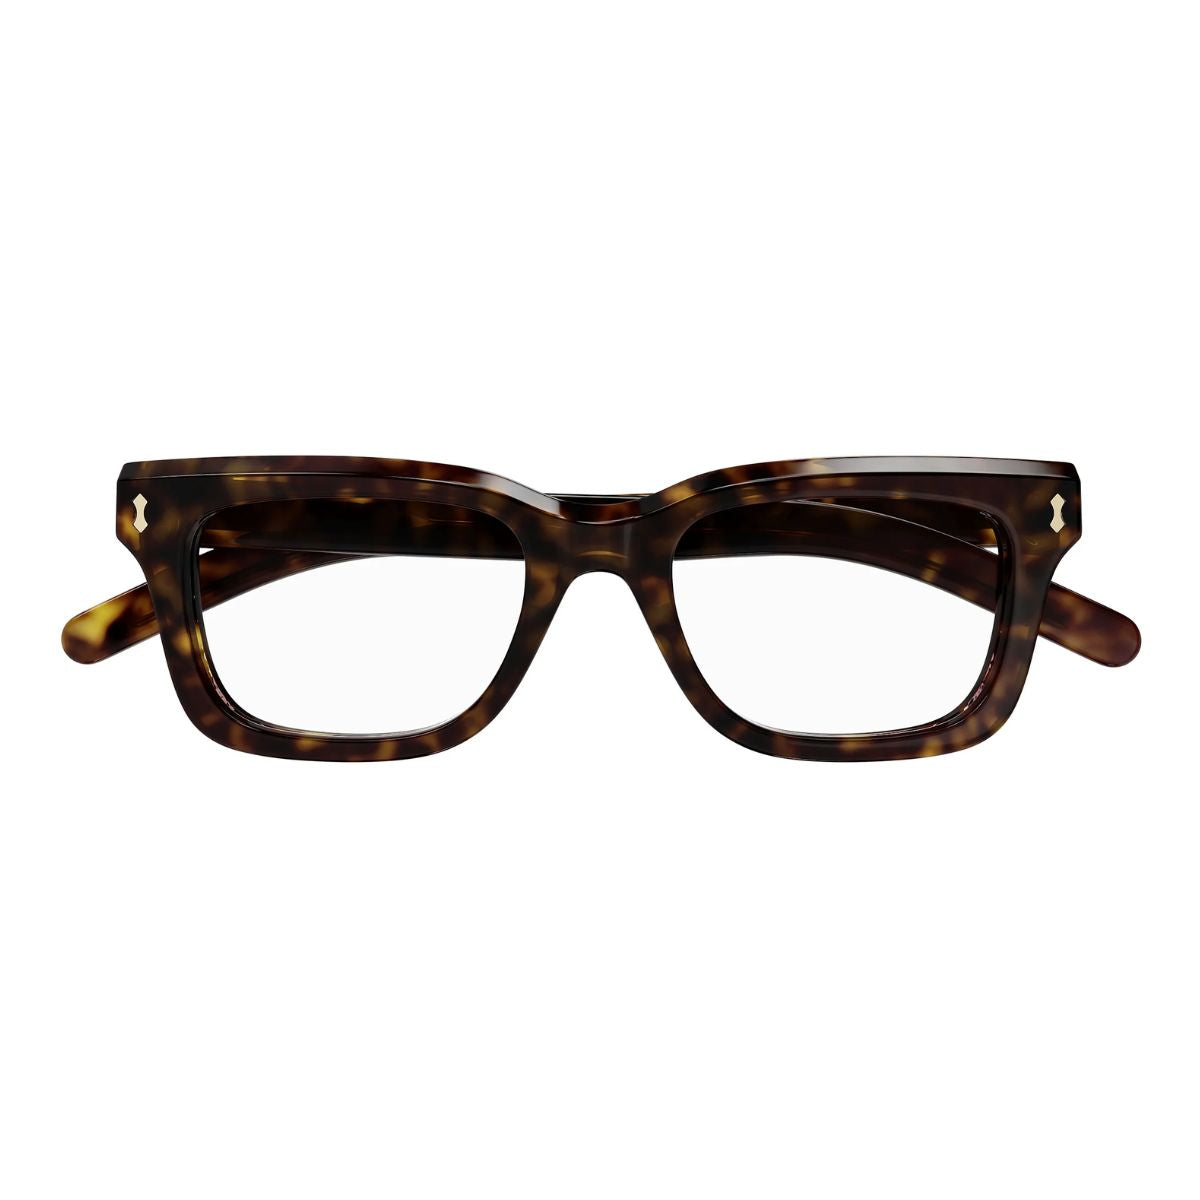 "Gucci Eyewear: Shop the Newest 1522O 006 Frames for Men & Women at Optorium"